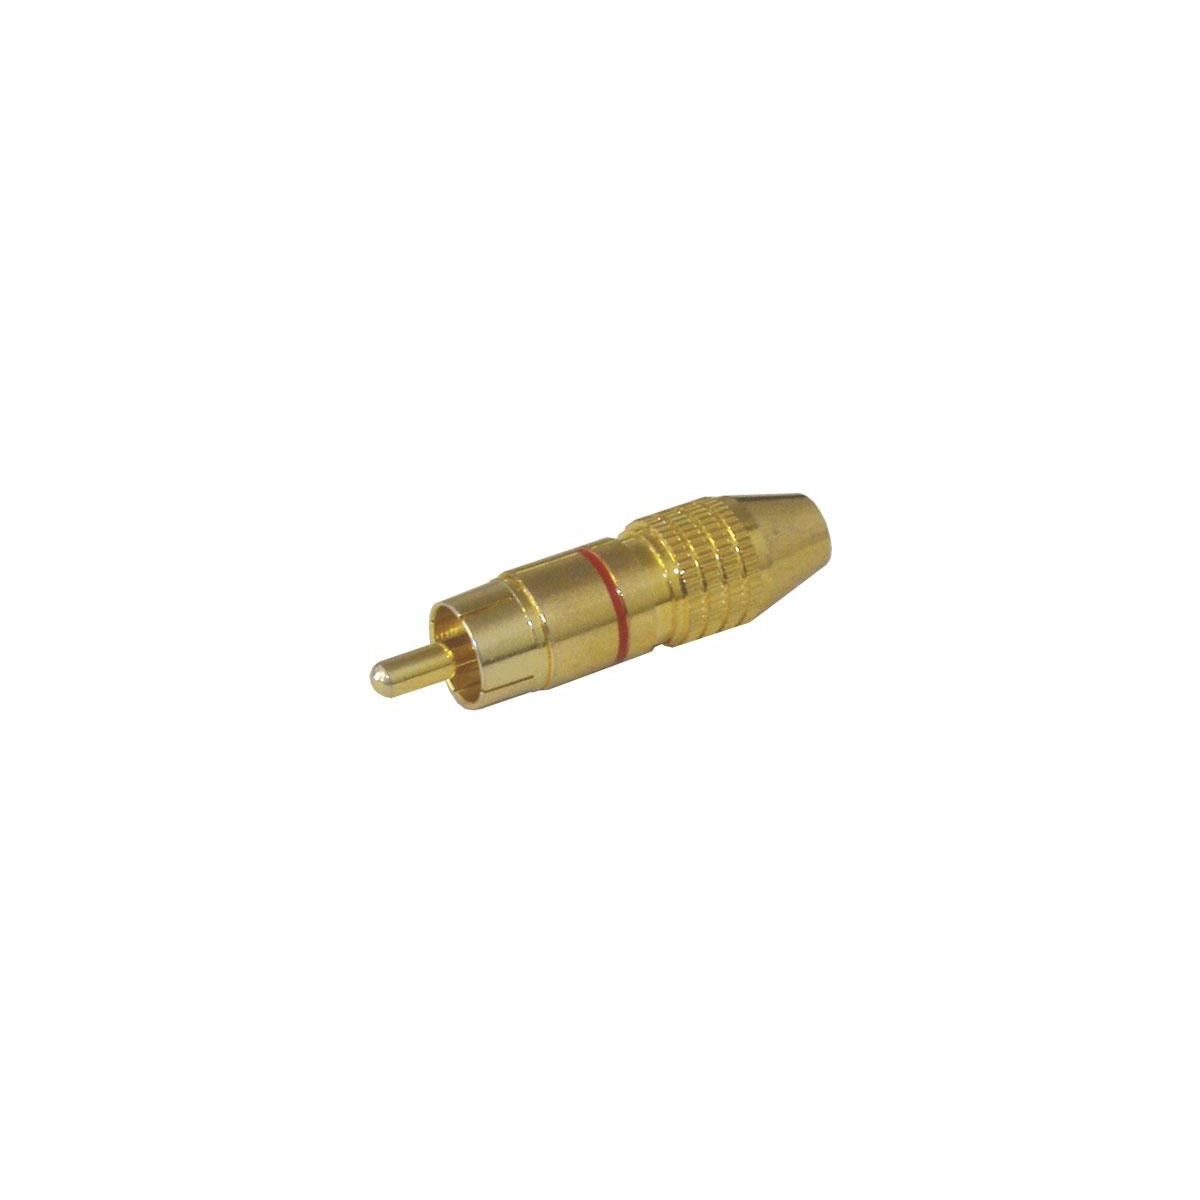 More about Konektor CINCH kabel kov zlatý pr.5-6mm červený